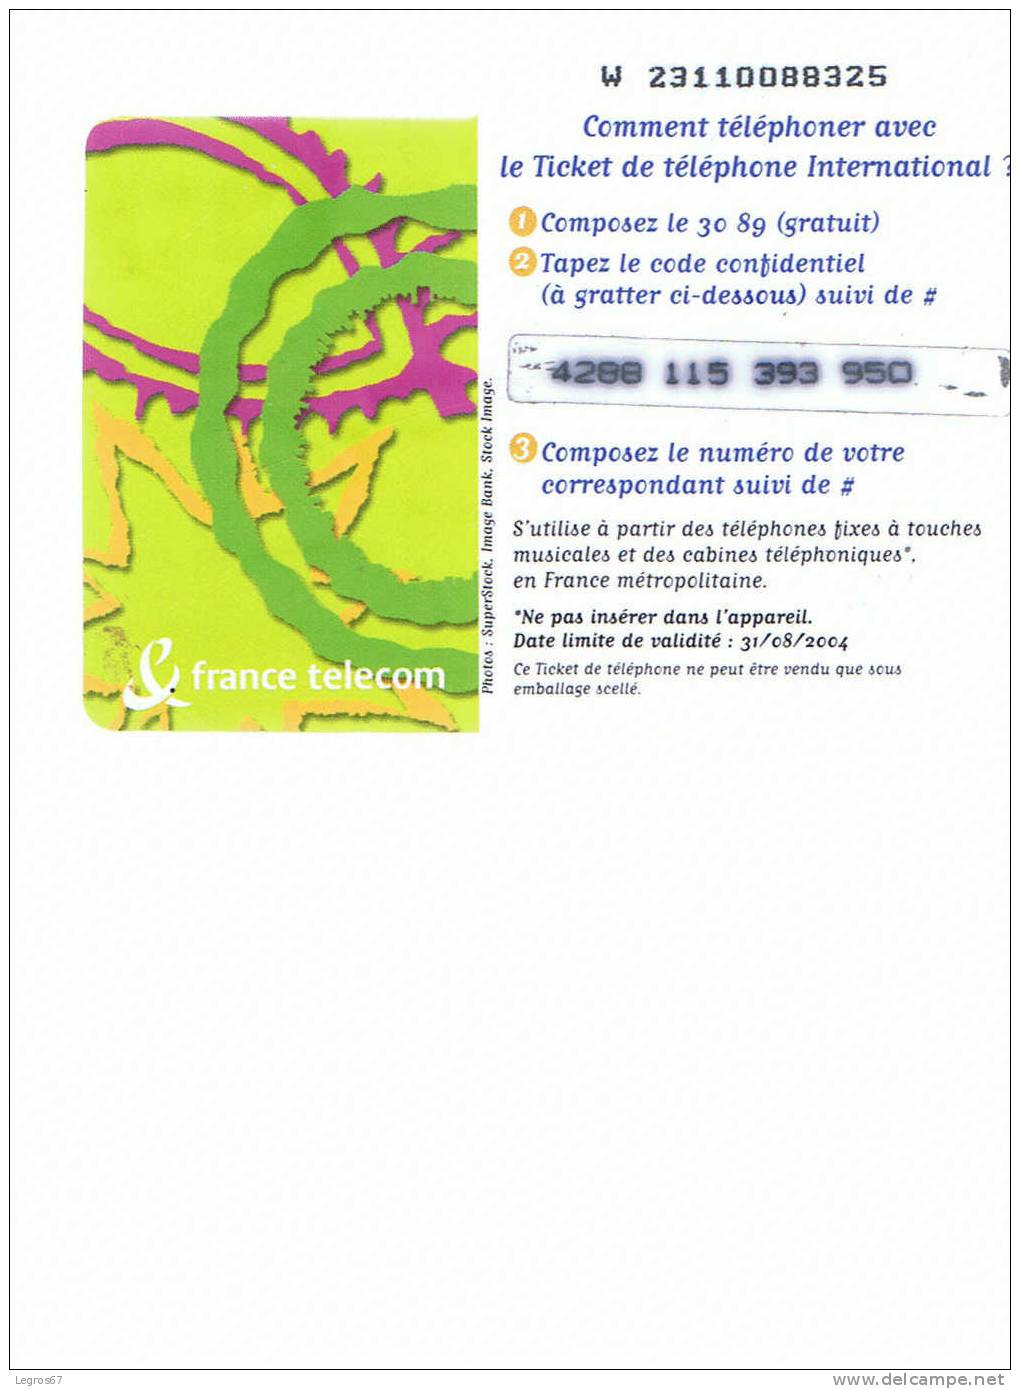 TICKET TELEPHONE 7.5 € - 31/08/2004 - Billetes FT